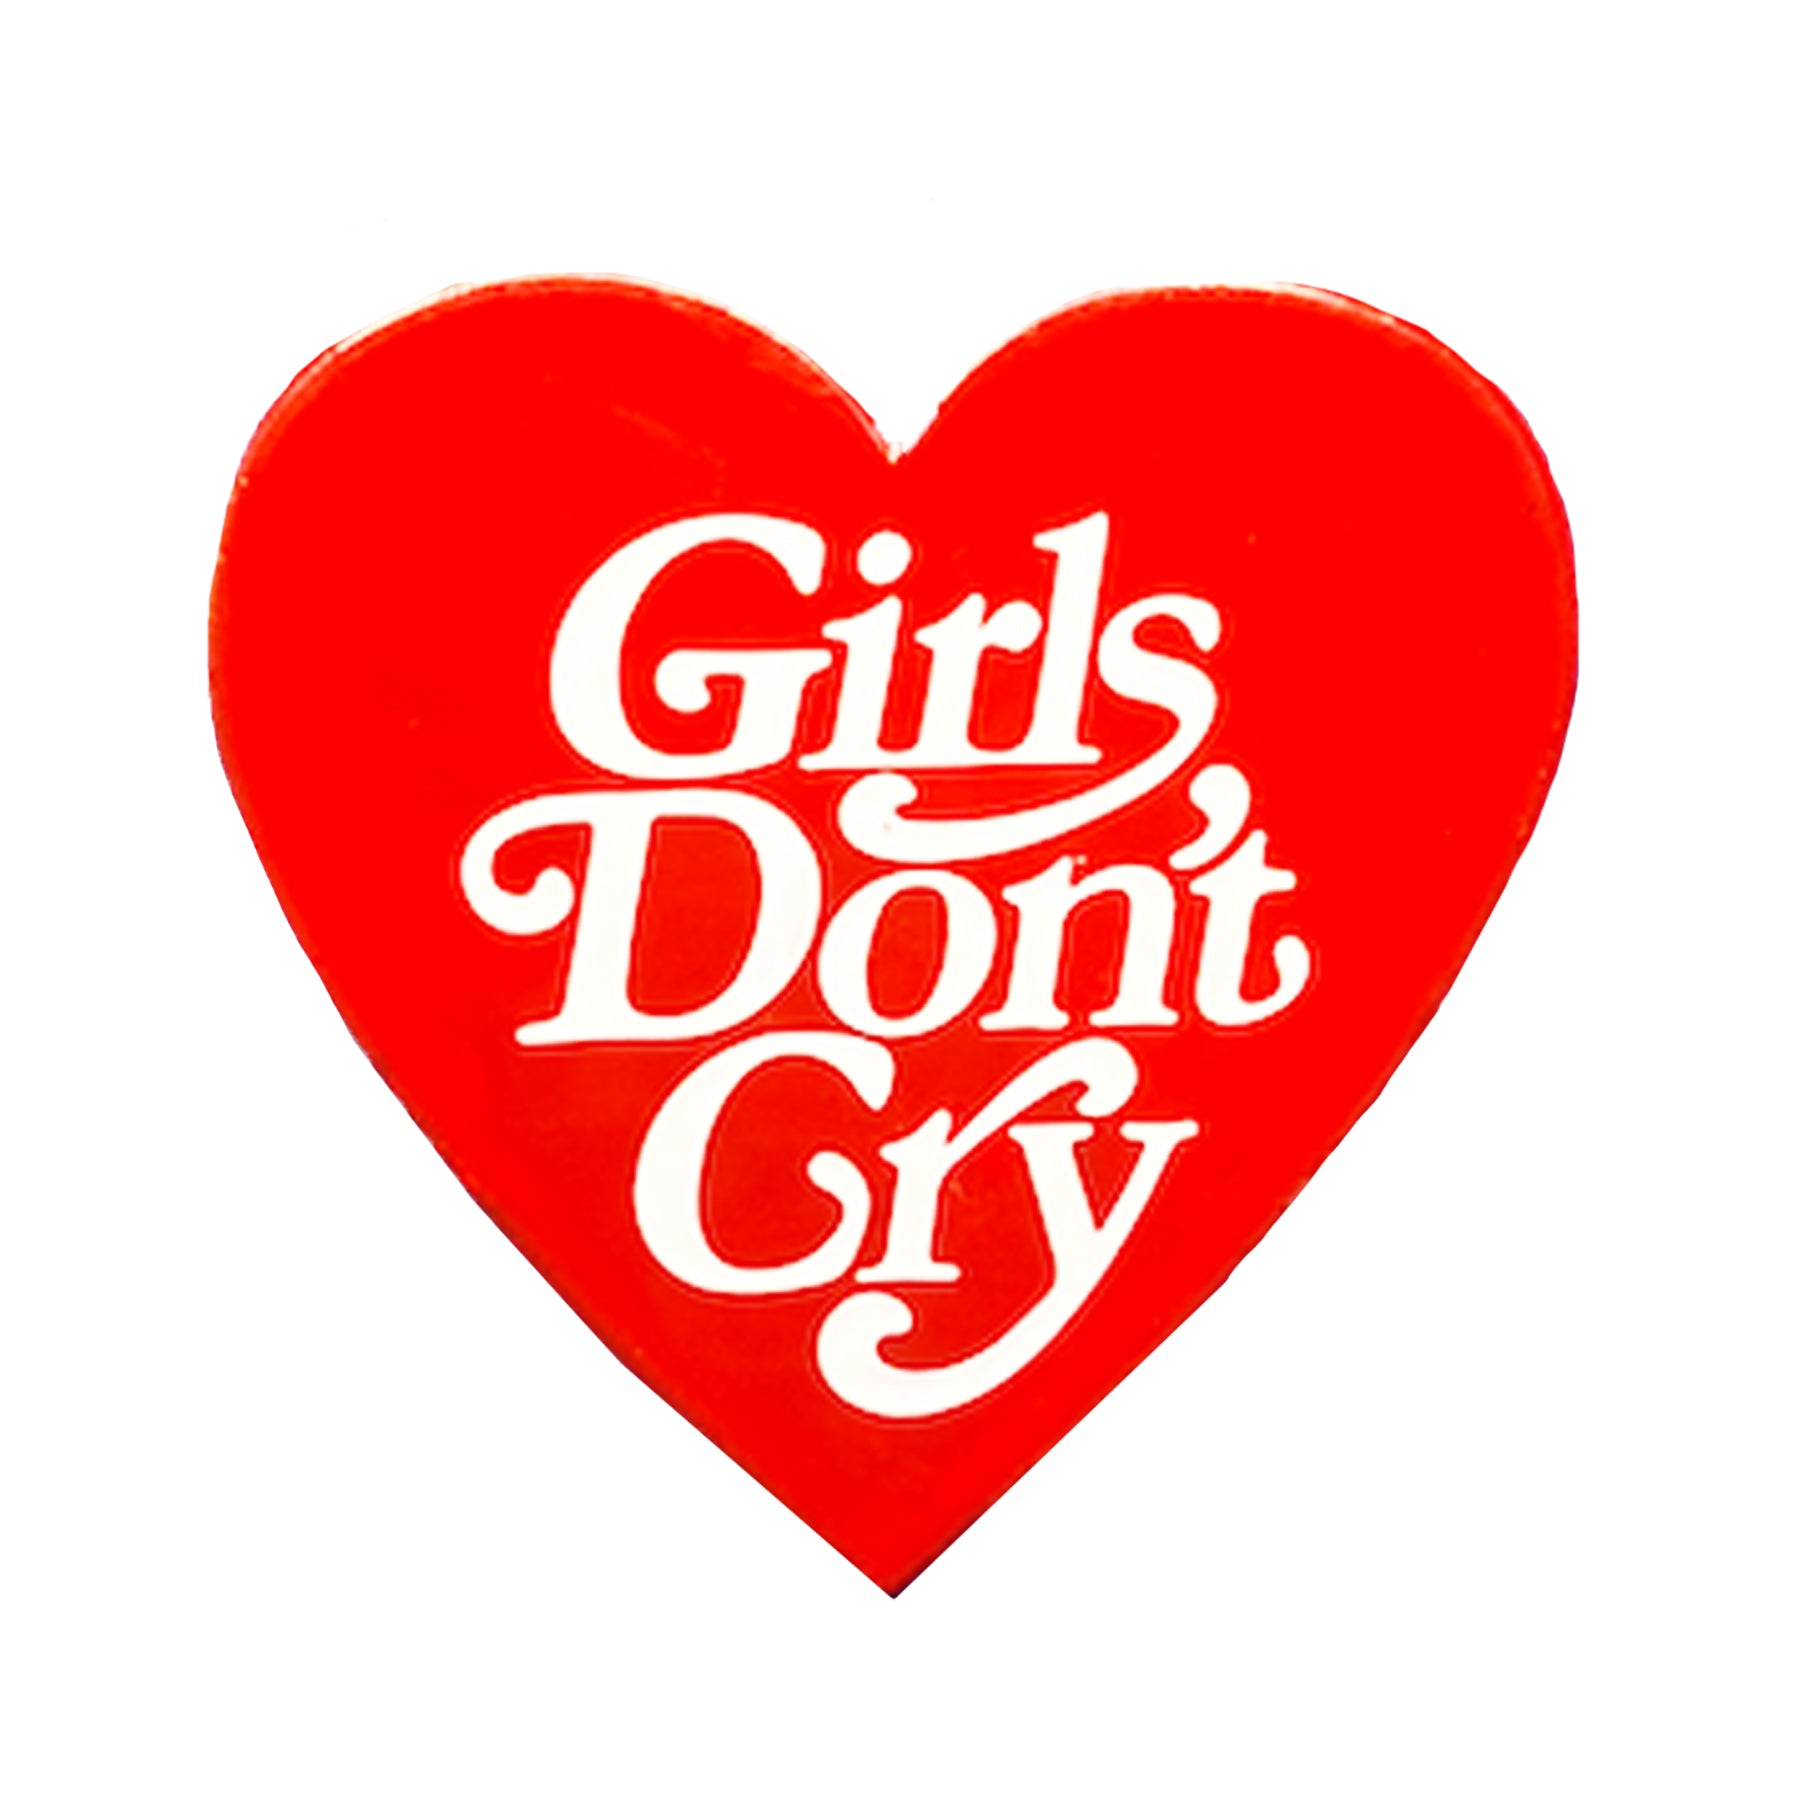 Verdy Girls don't cry pin